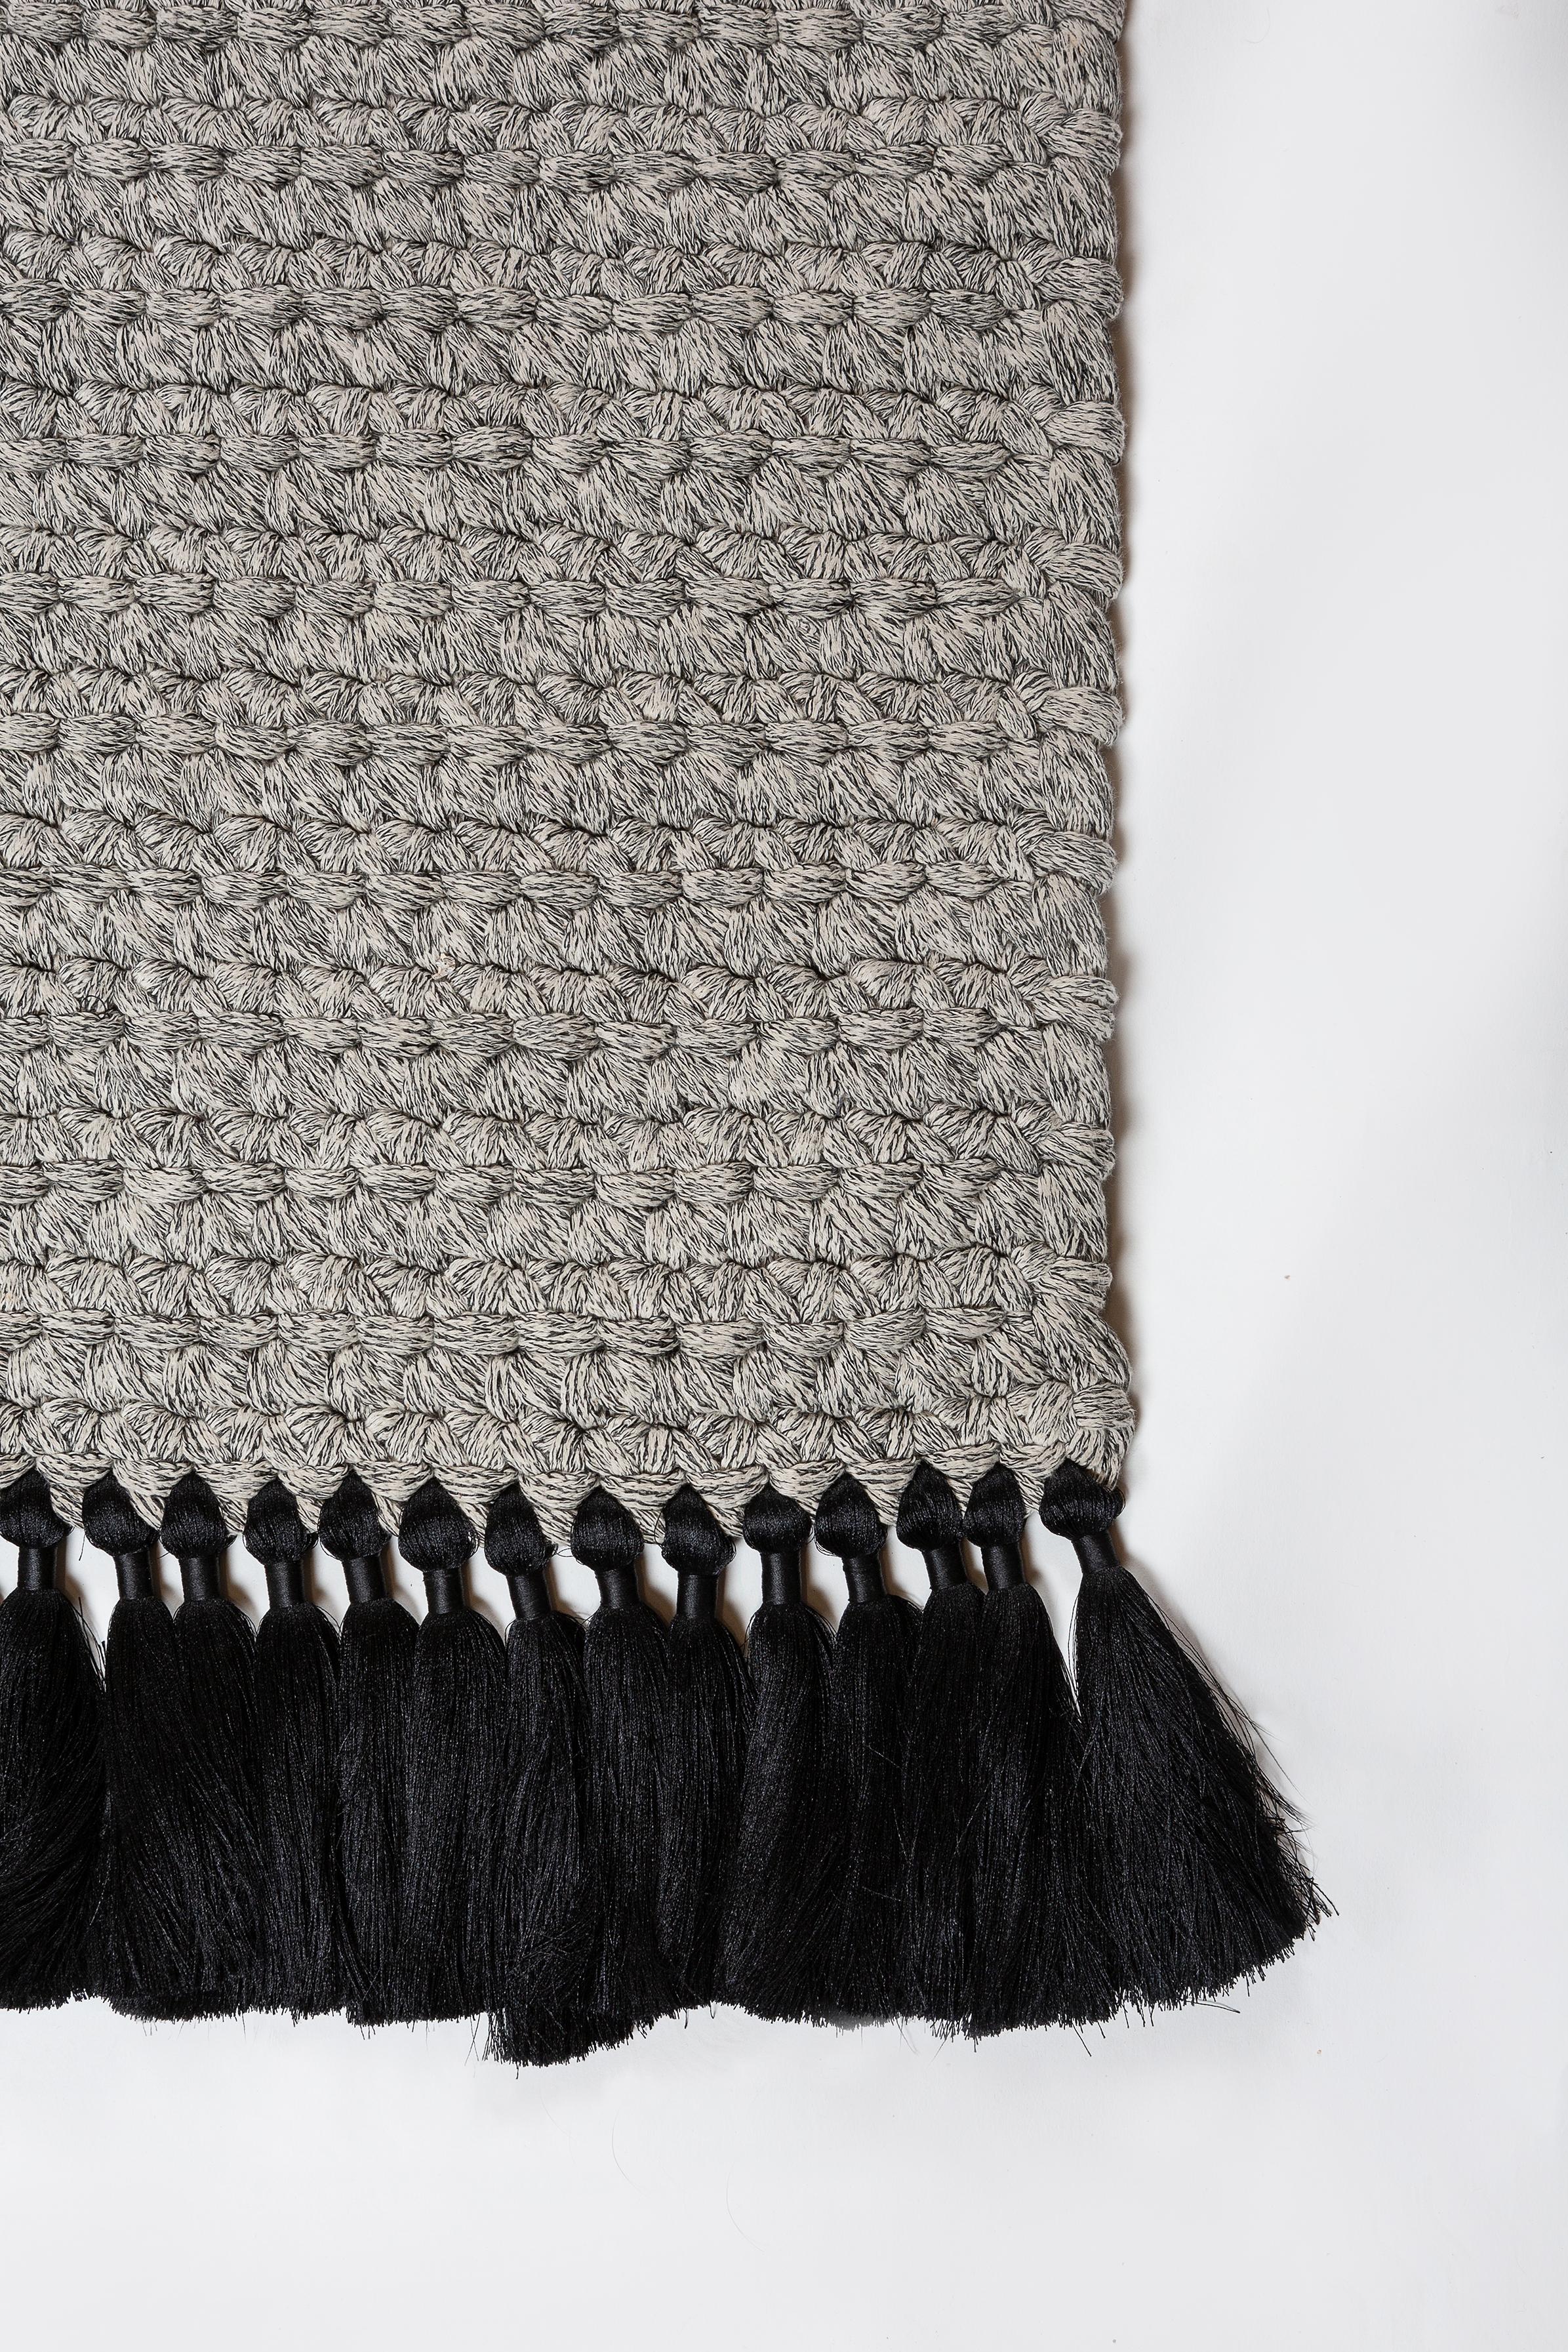 Handmade Crochet Two-Tone Rug in Black Made of iota's Bespoke Yarns 2